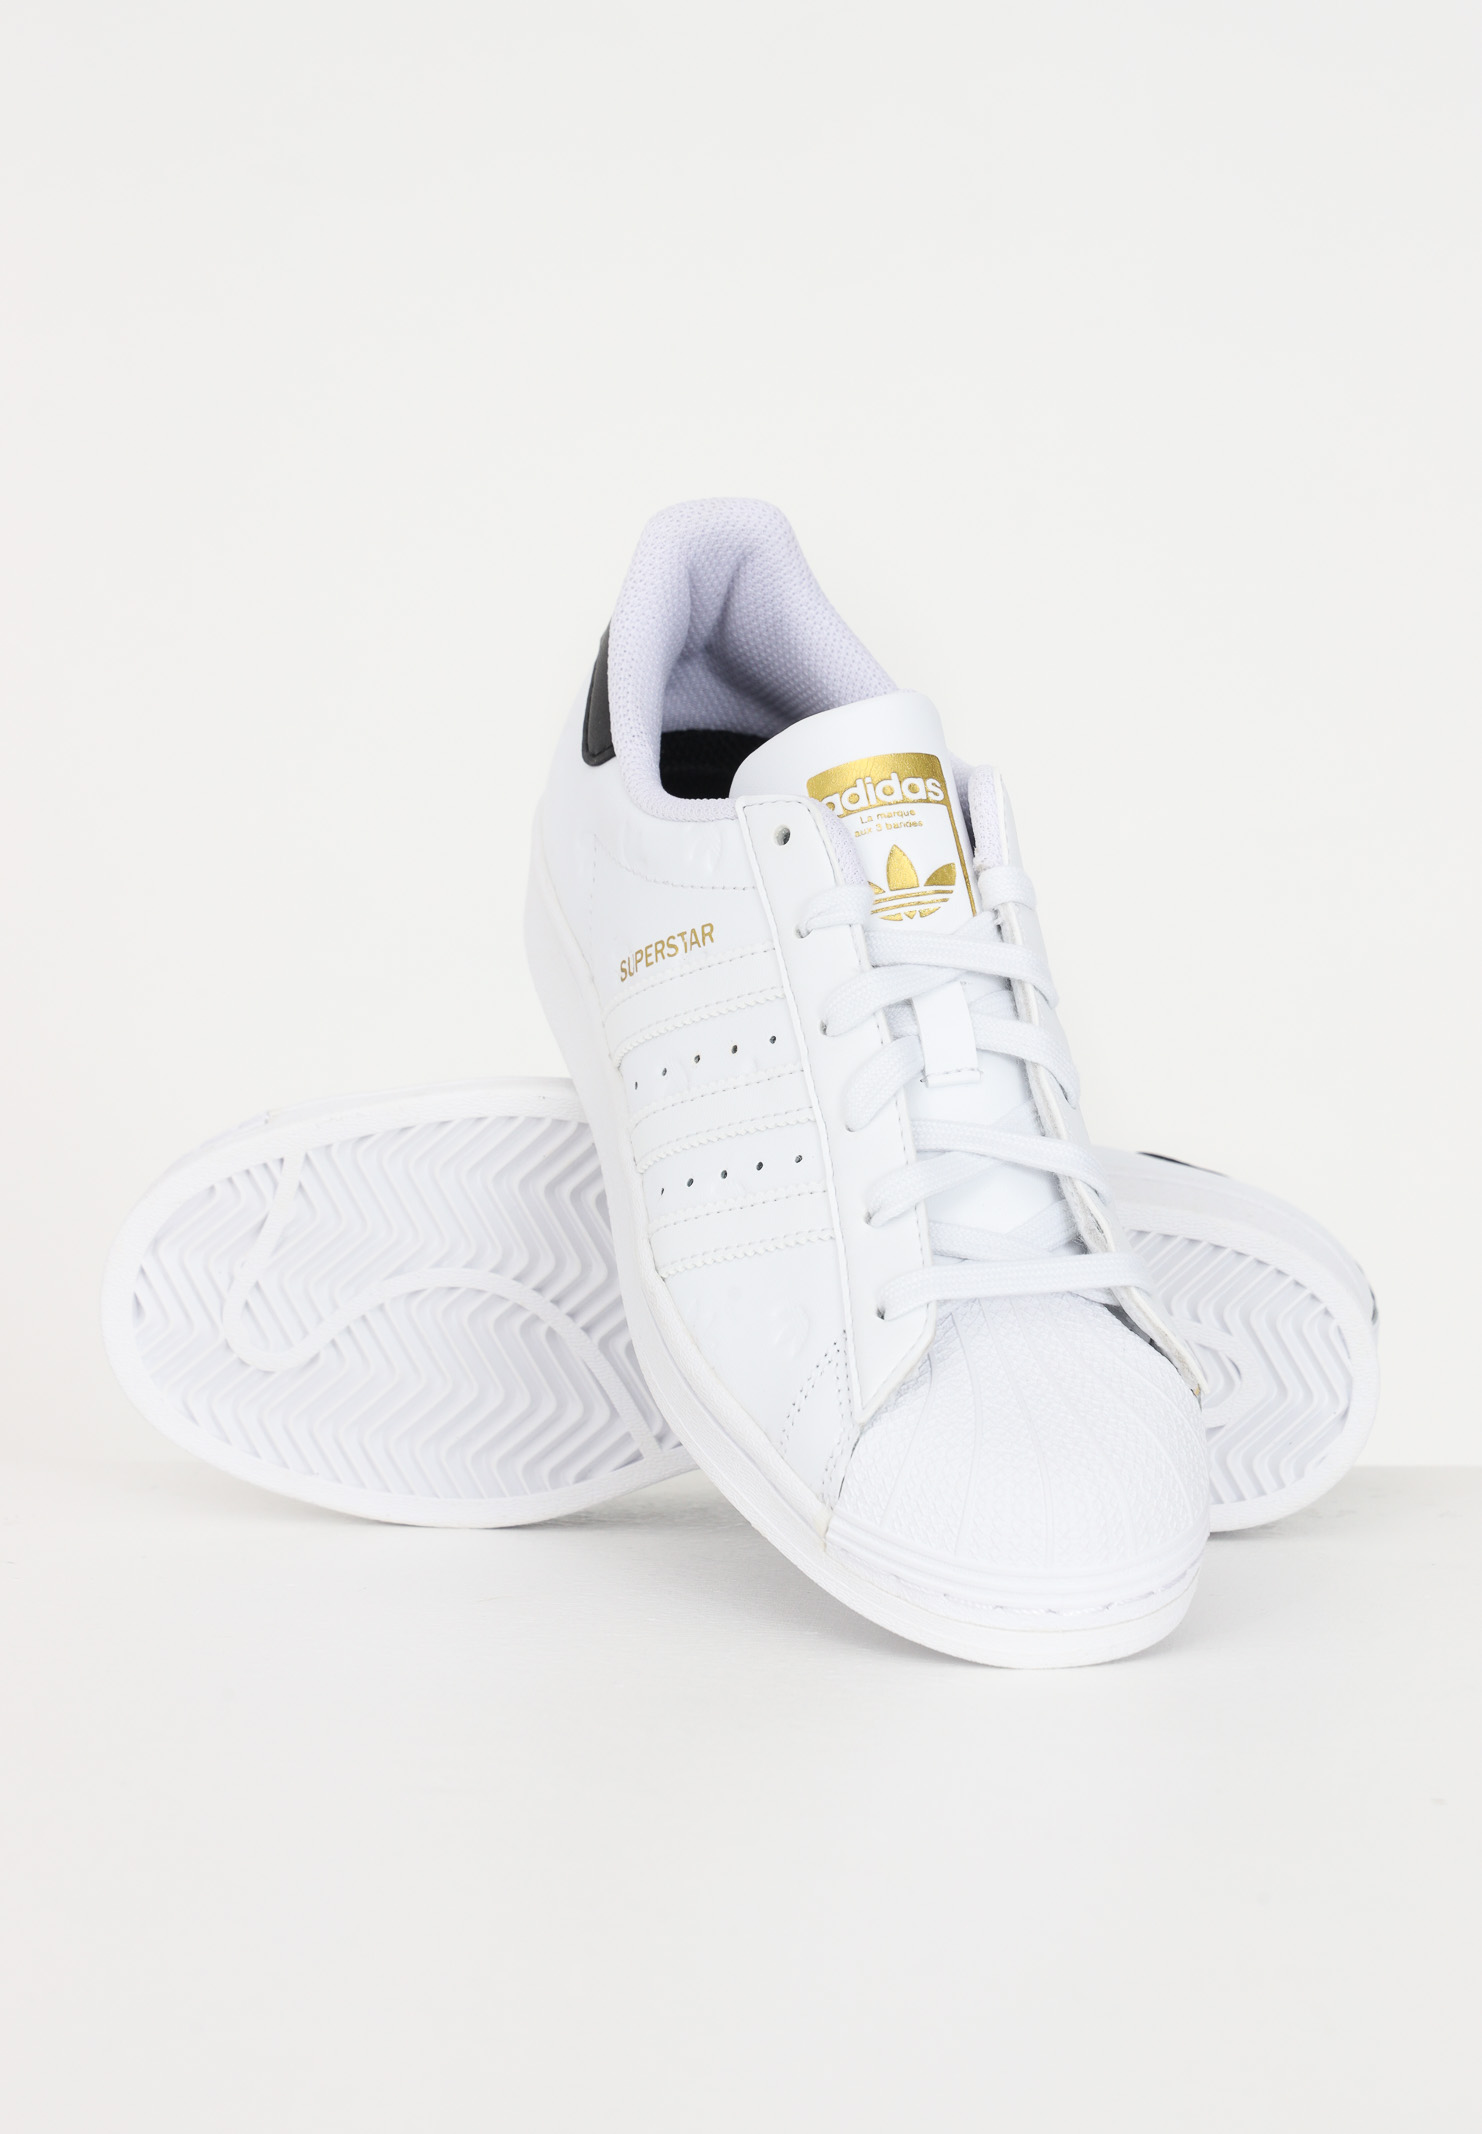 White Superstar sports sneakers for women - ADIDAS - Pavidas